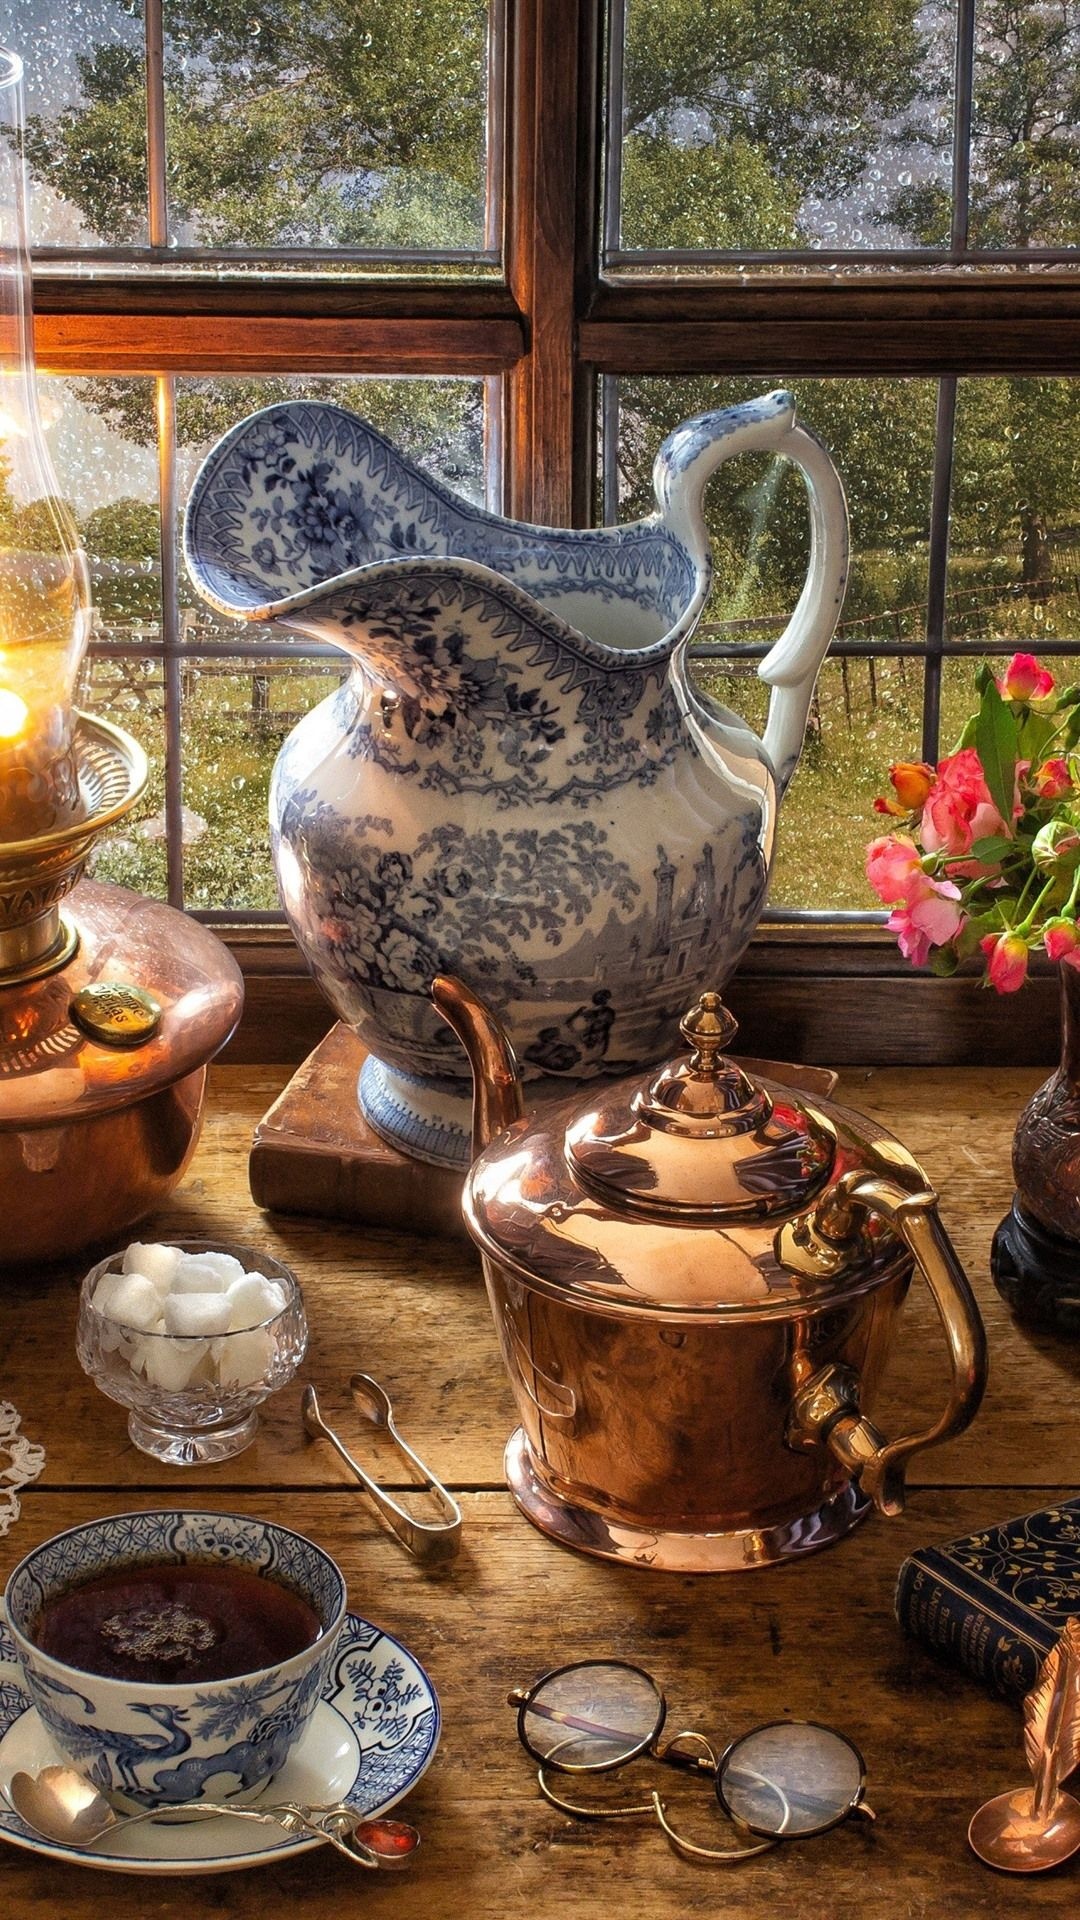 Tea: An aromatic beverage, Camellia sinensis, Teatime. 1080x1920 Full HD Wallpaper.